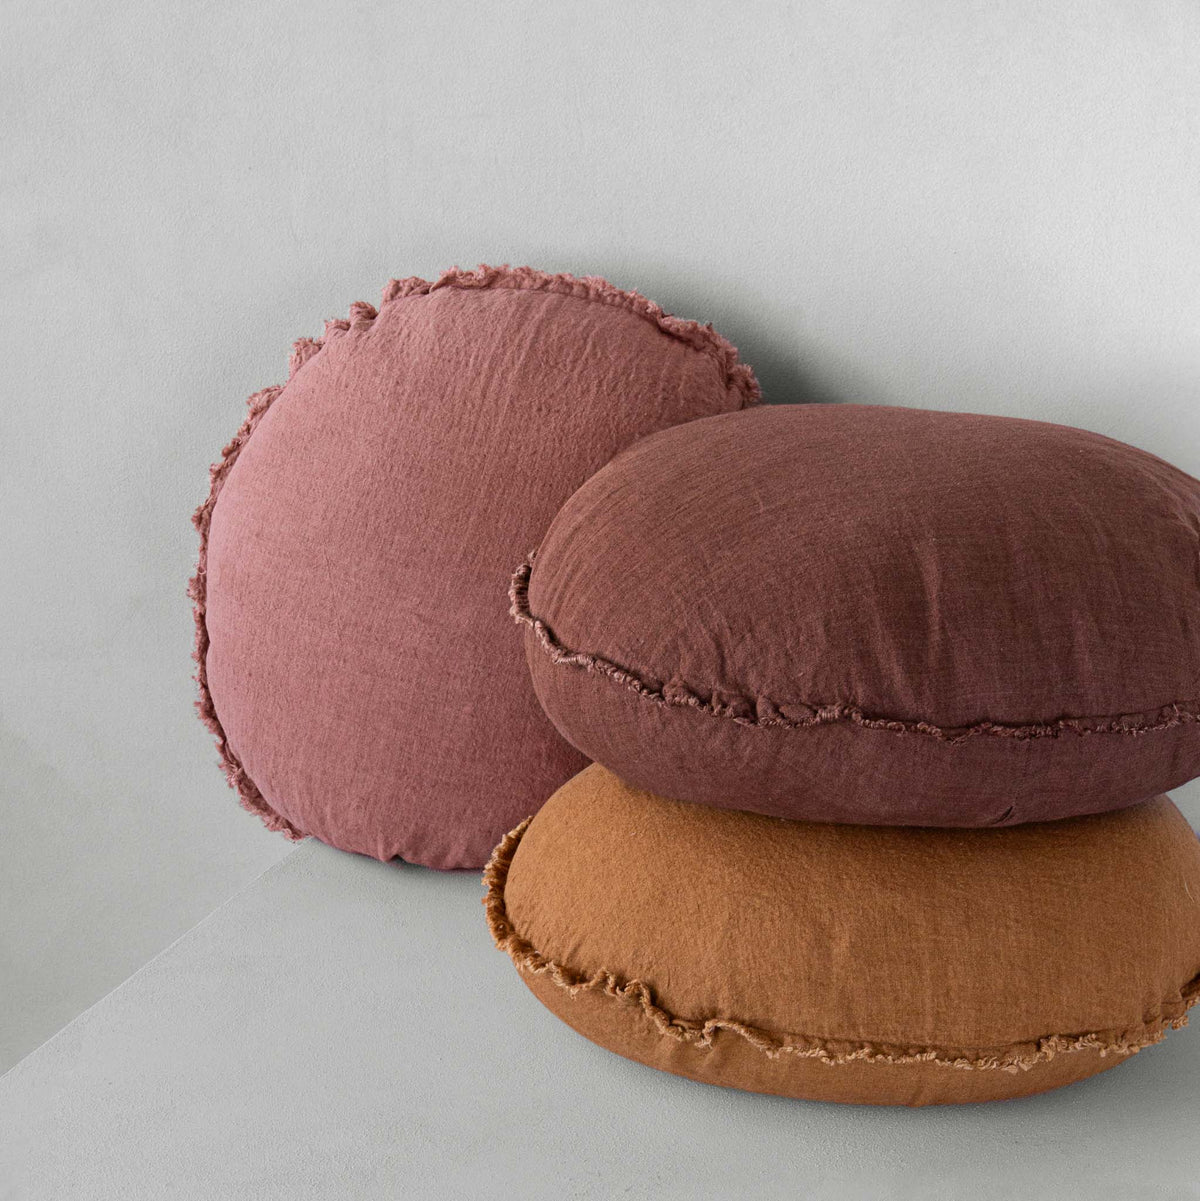 Flocca Macaron Linen Cushion - Russo